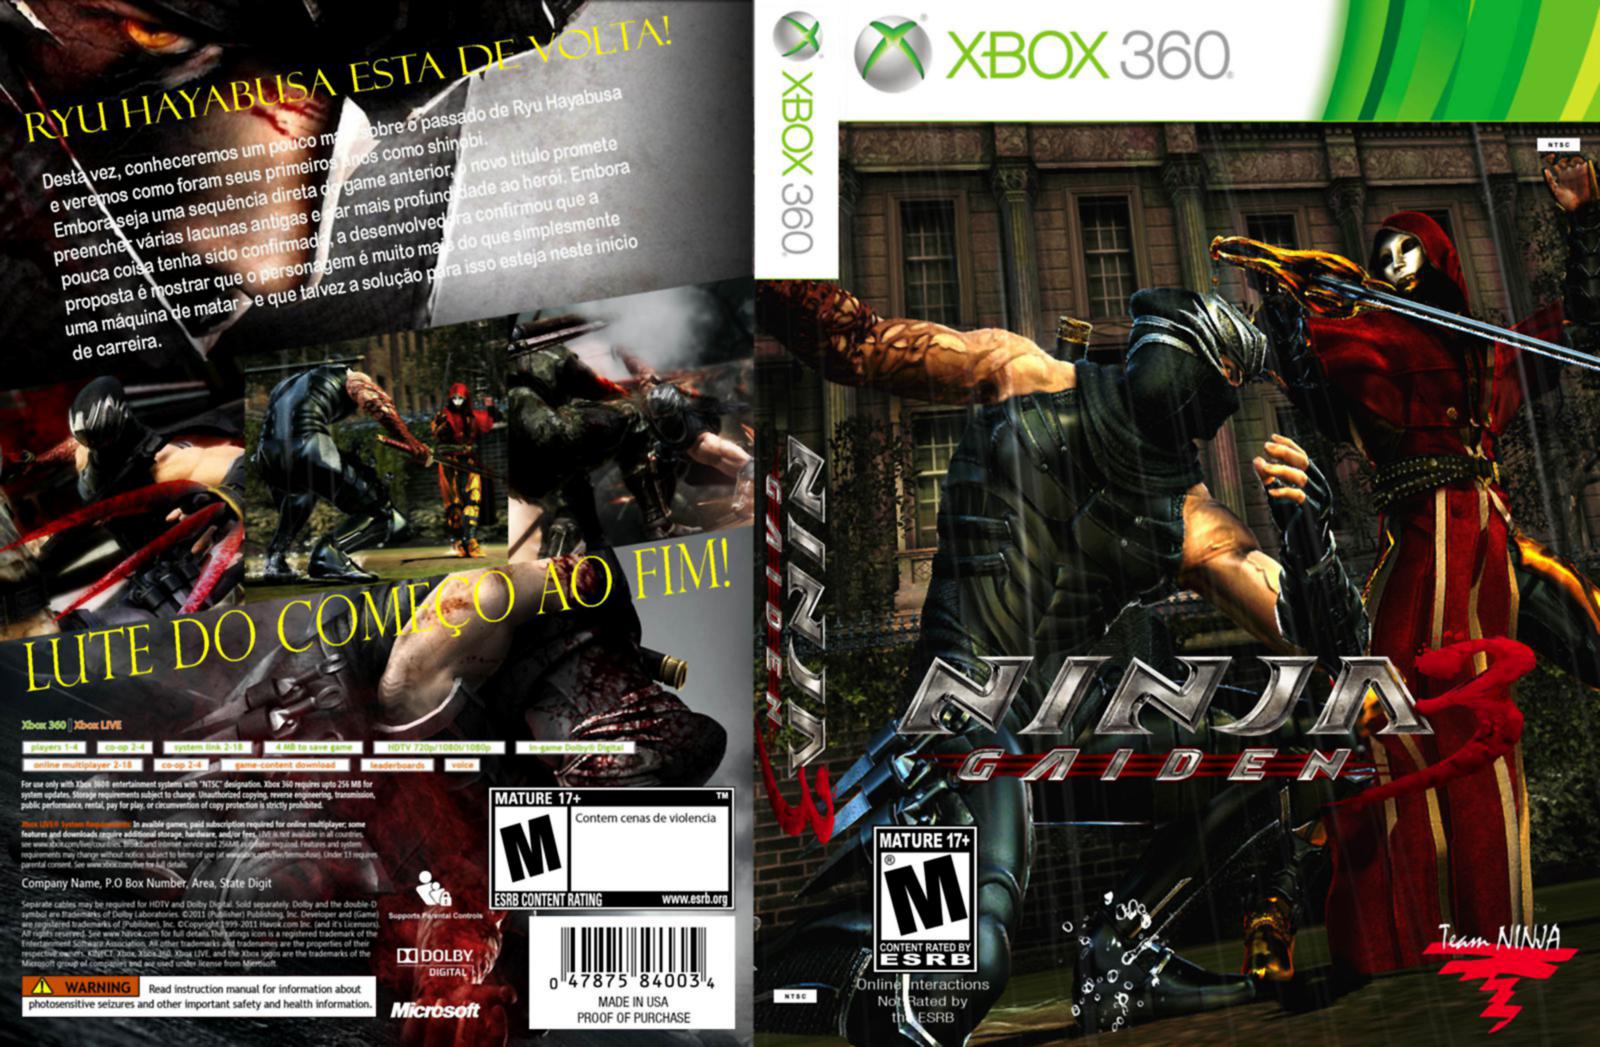 Xbox 360 Ninja Gaiden 3